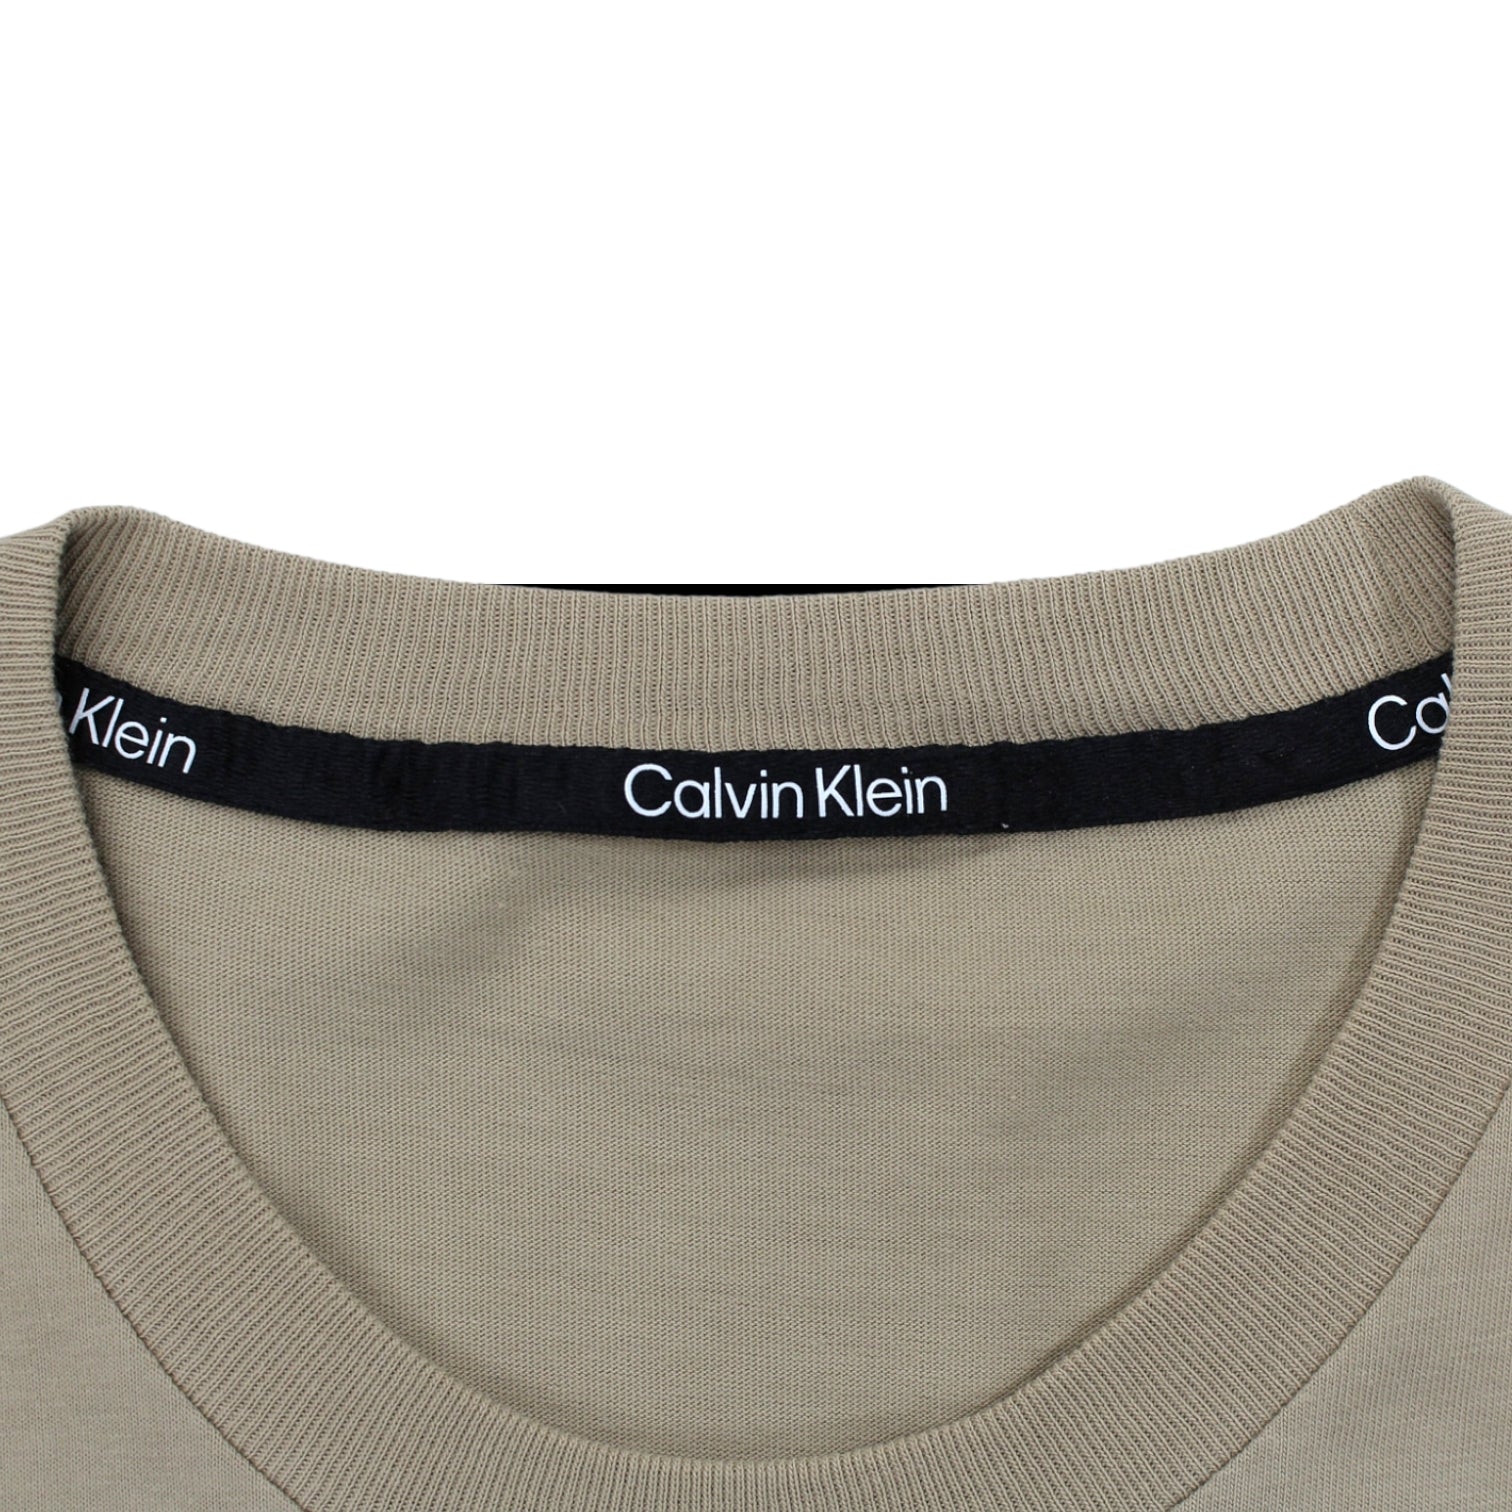 Calvin Klein Stone Logo T-Shirt